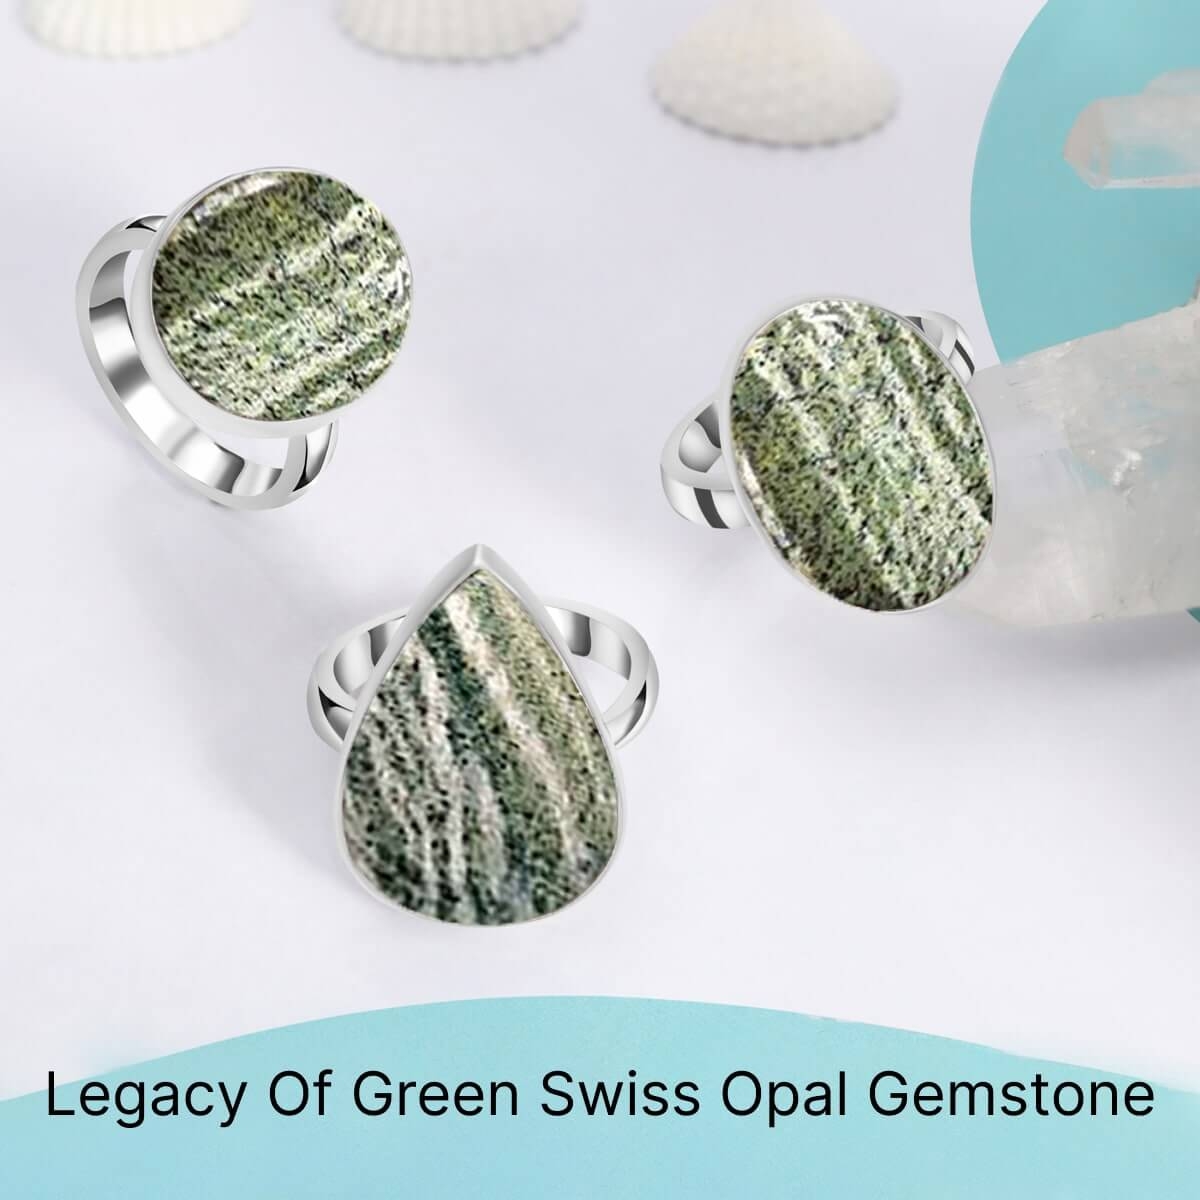 History of Green Swiss Opal Gemstone